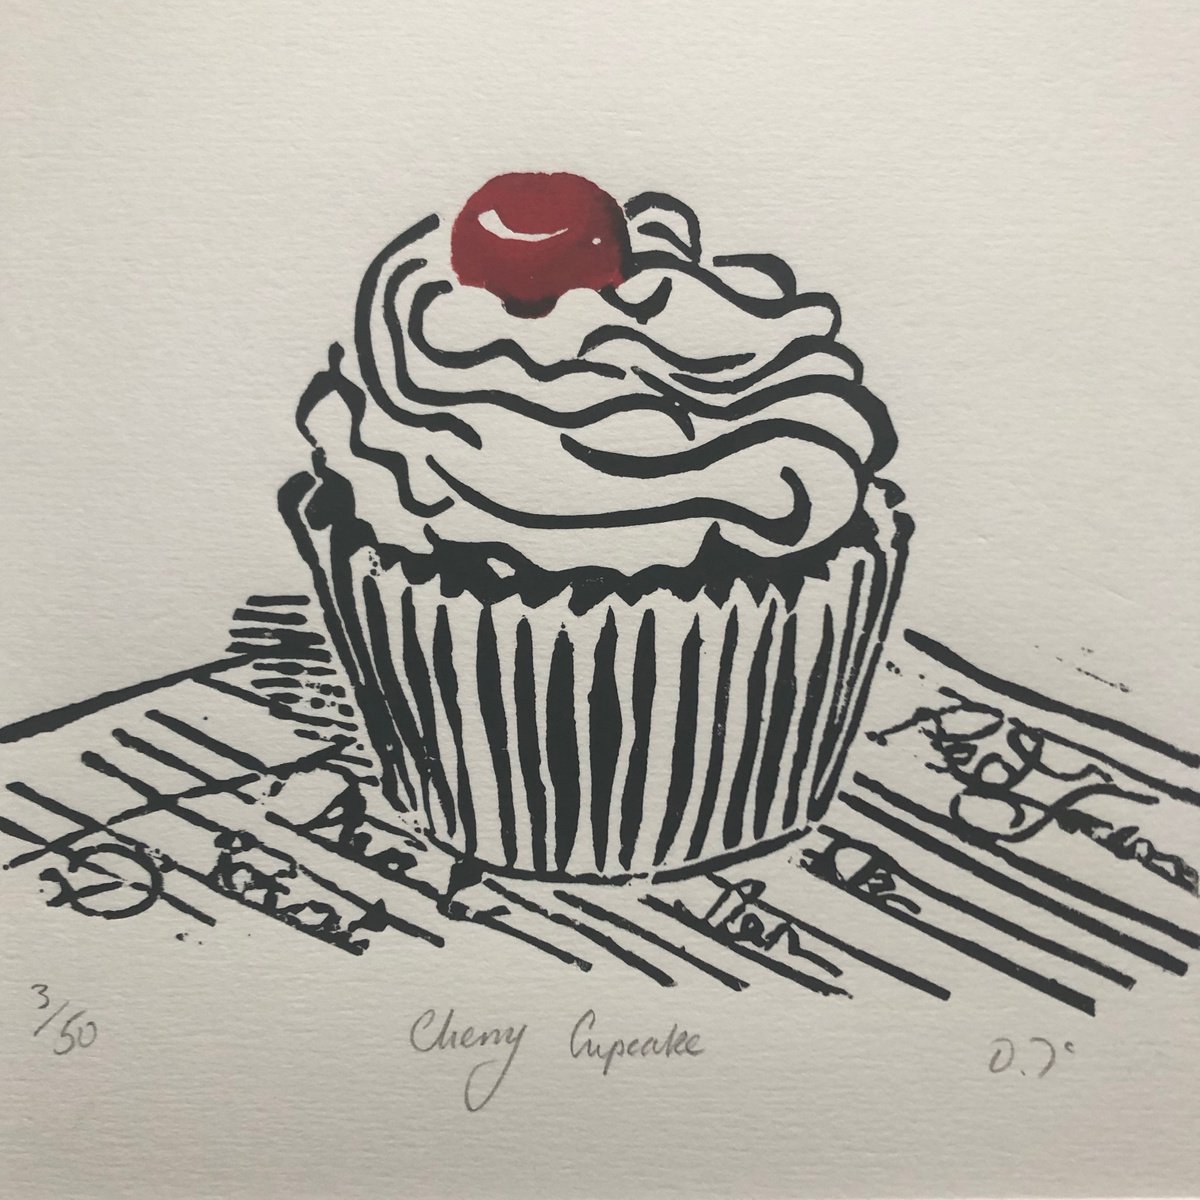 Cherry Cupcake by Diane McLellan